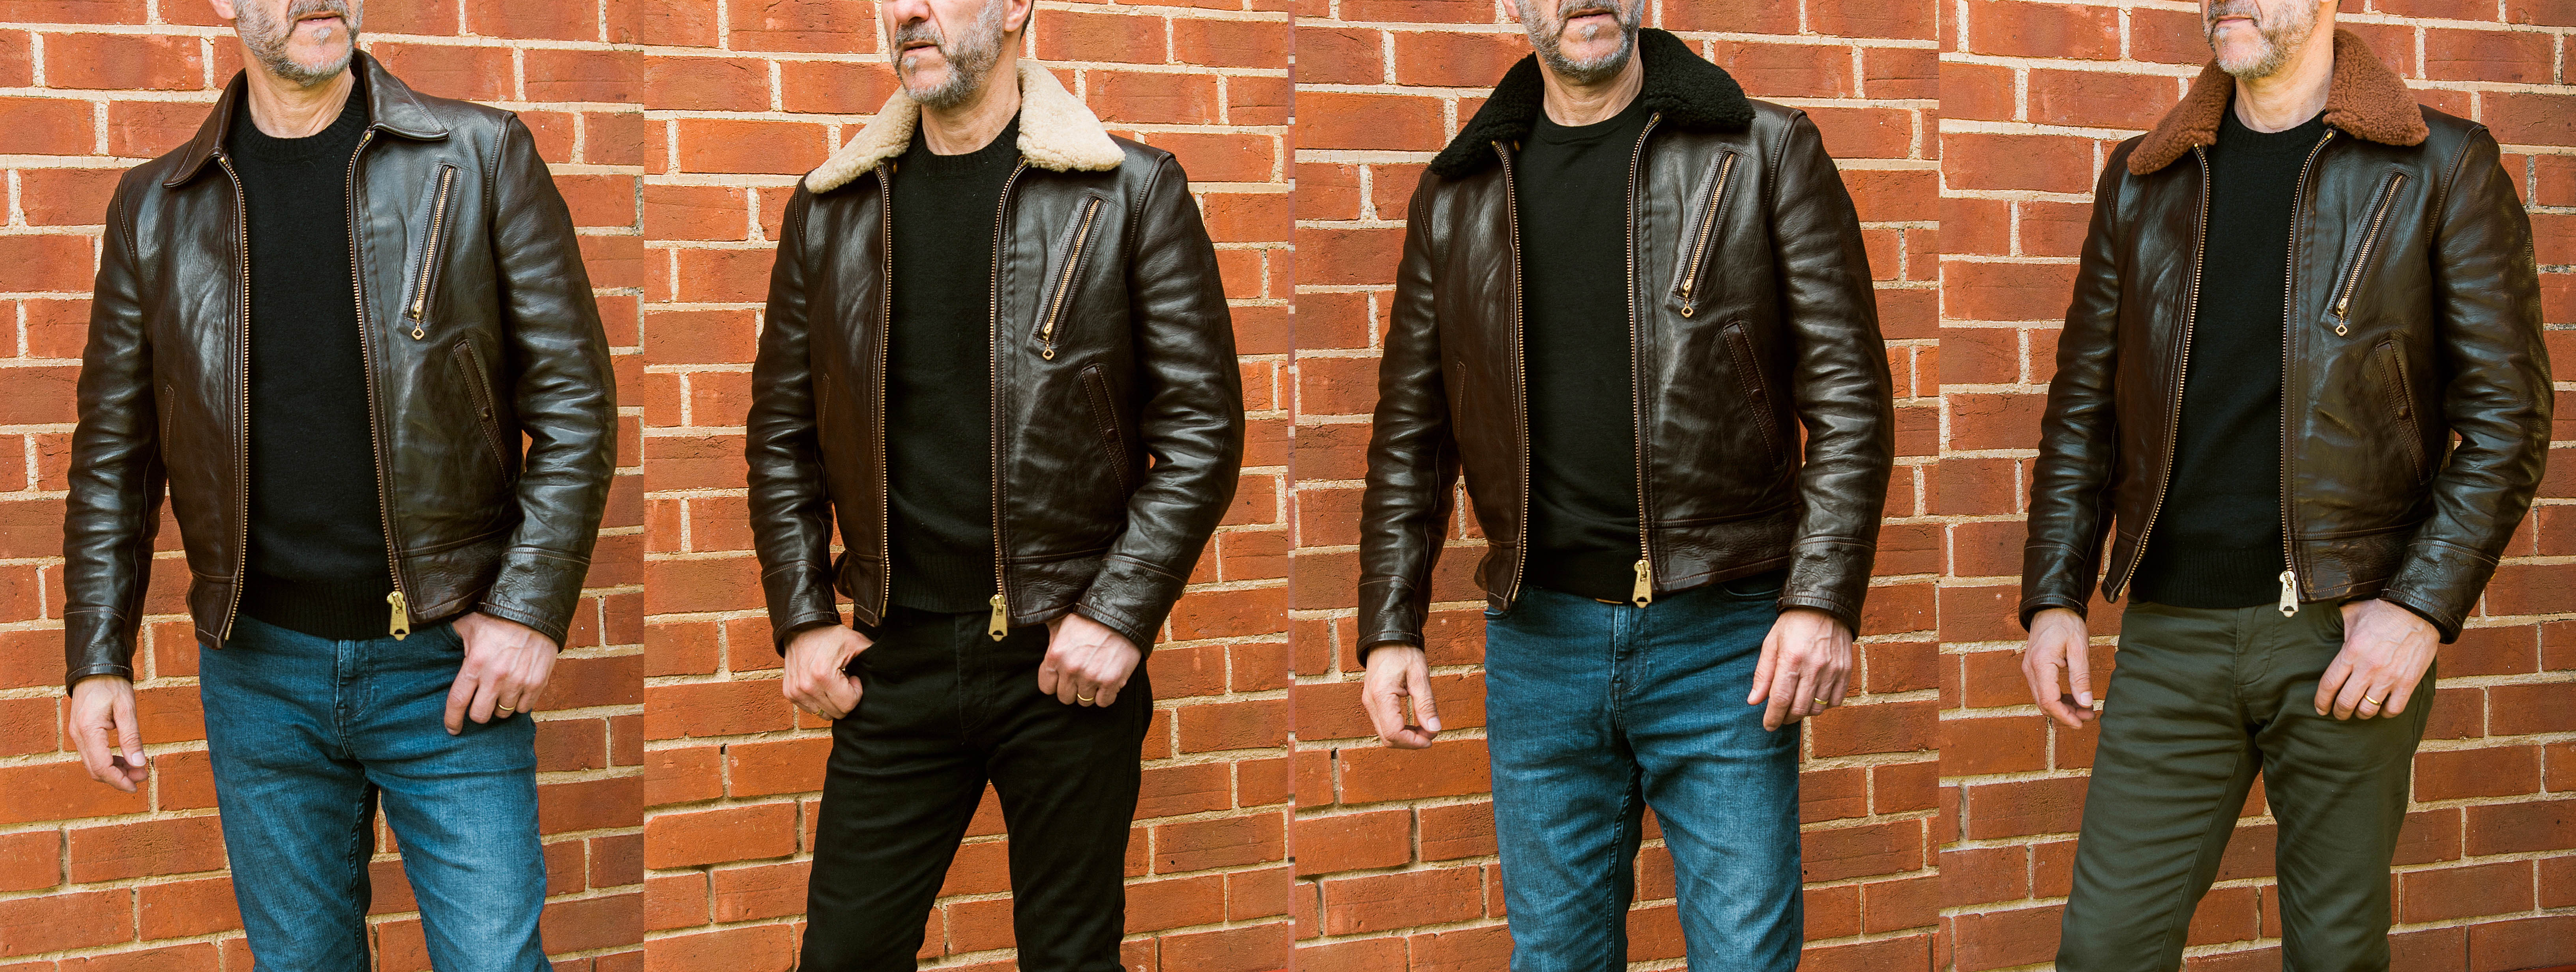 Thedi Leather Jacket code -162707 - 4 looks 2.jpg